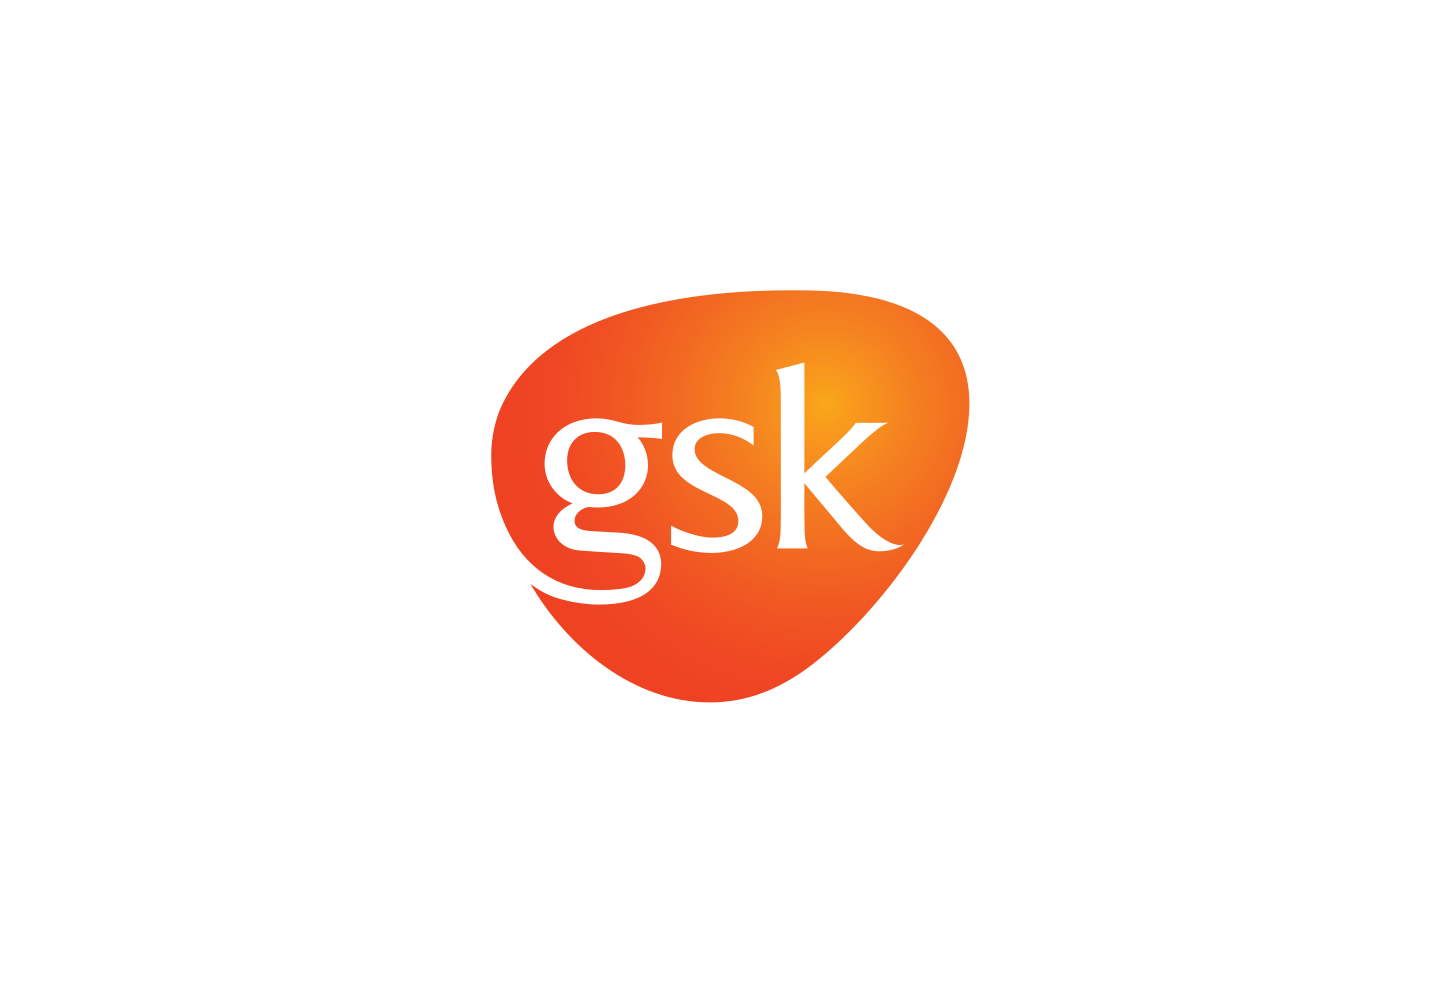 Gsk 980. ГЛАКСОСМИТКЛЯЙН. GSK. GSK logo. Contact by GLAXOSMITHKLINE logo.